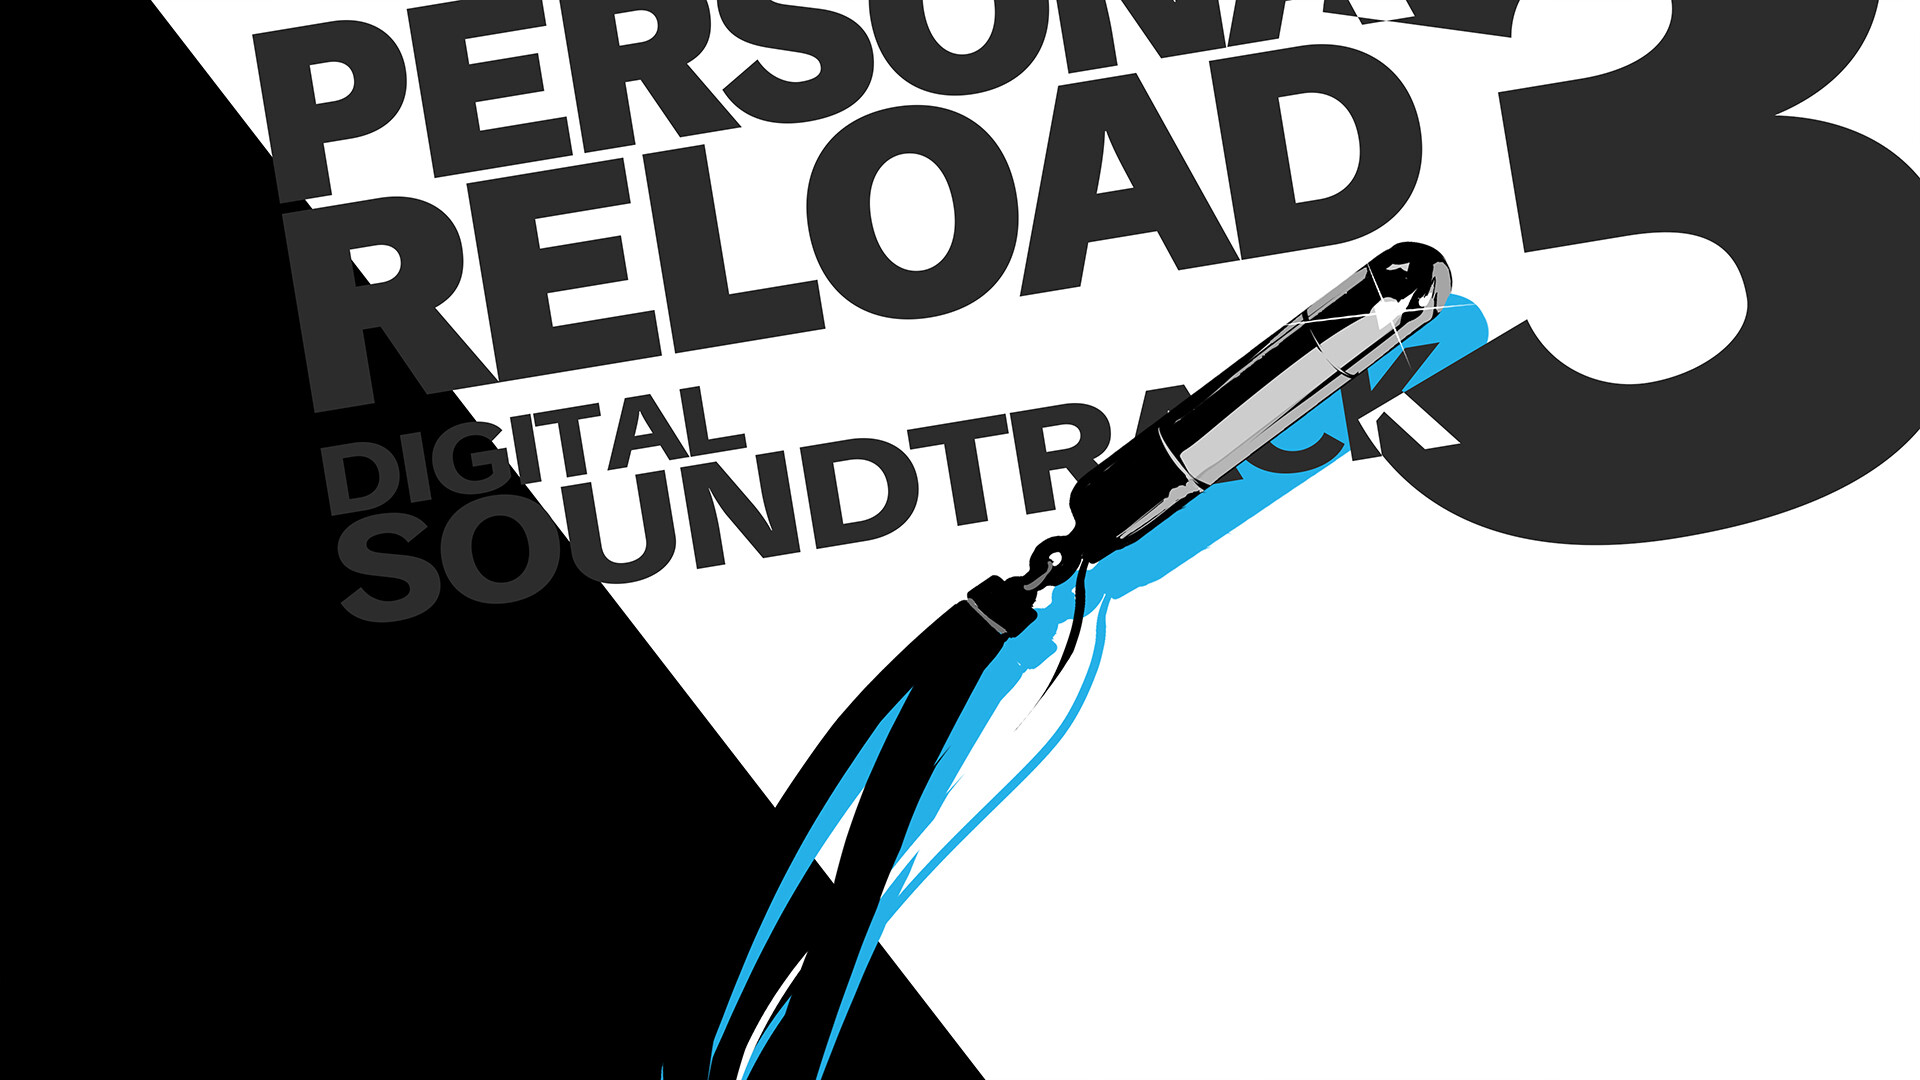 Persona 3 Reload - Digital Soundtrack on Steam